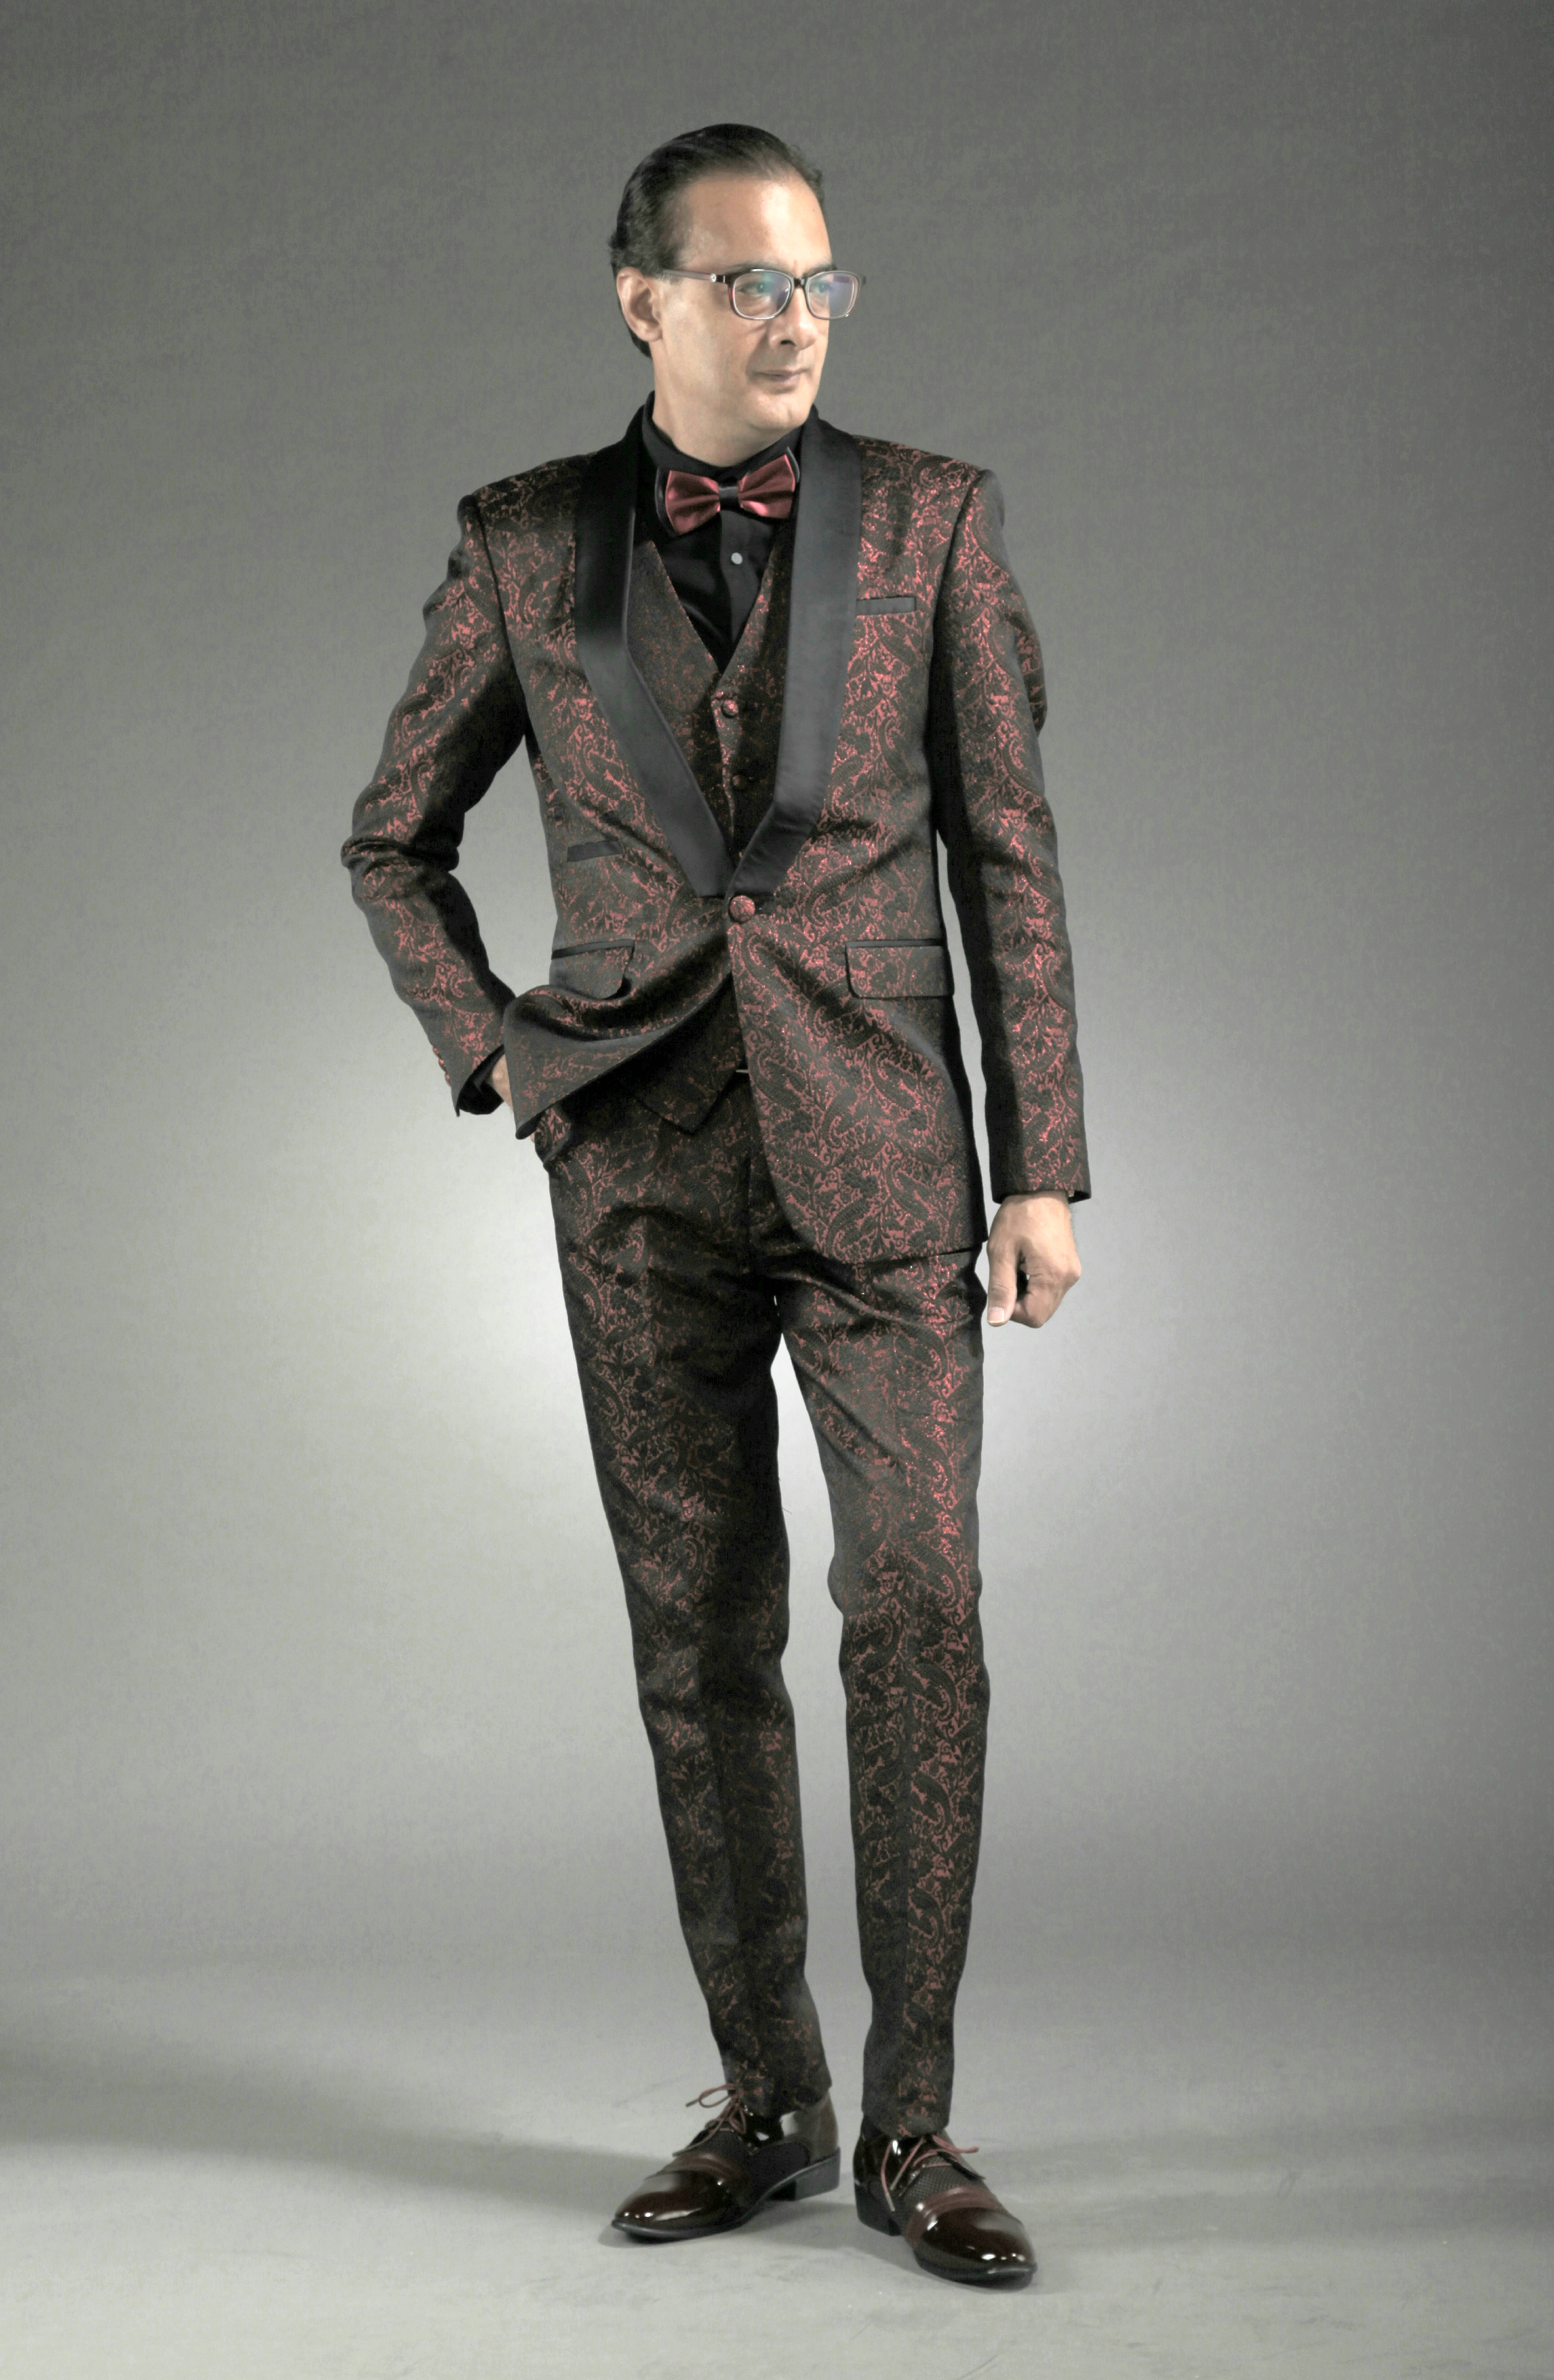 suit-rental-suits-rent-hire-designer-my-singapore-tailor-tailors-rentals-shop-tuxedo-black-tie-wedding-formal-01